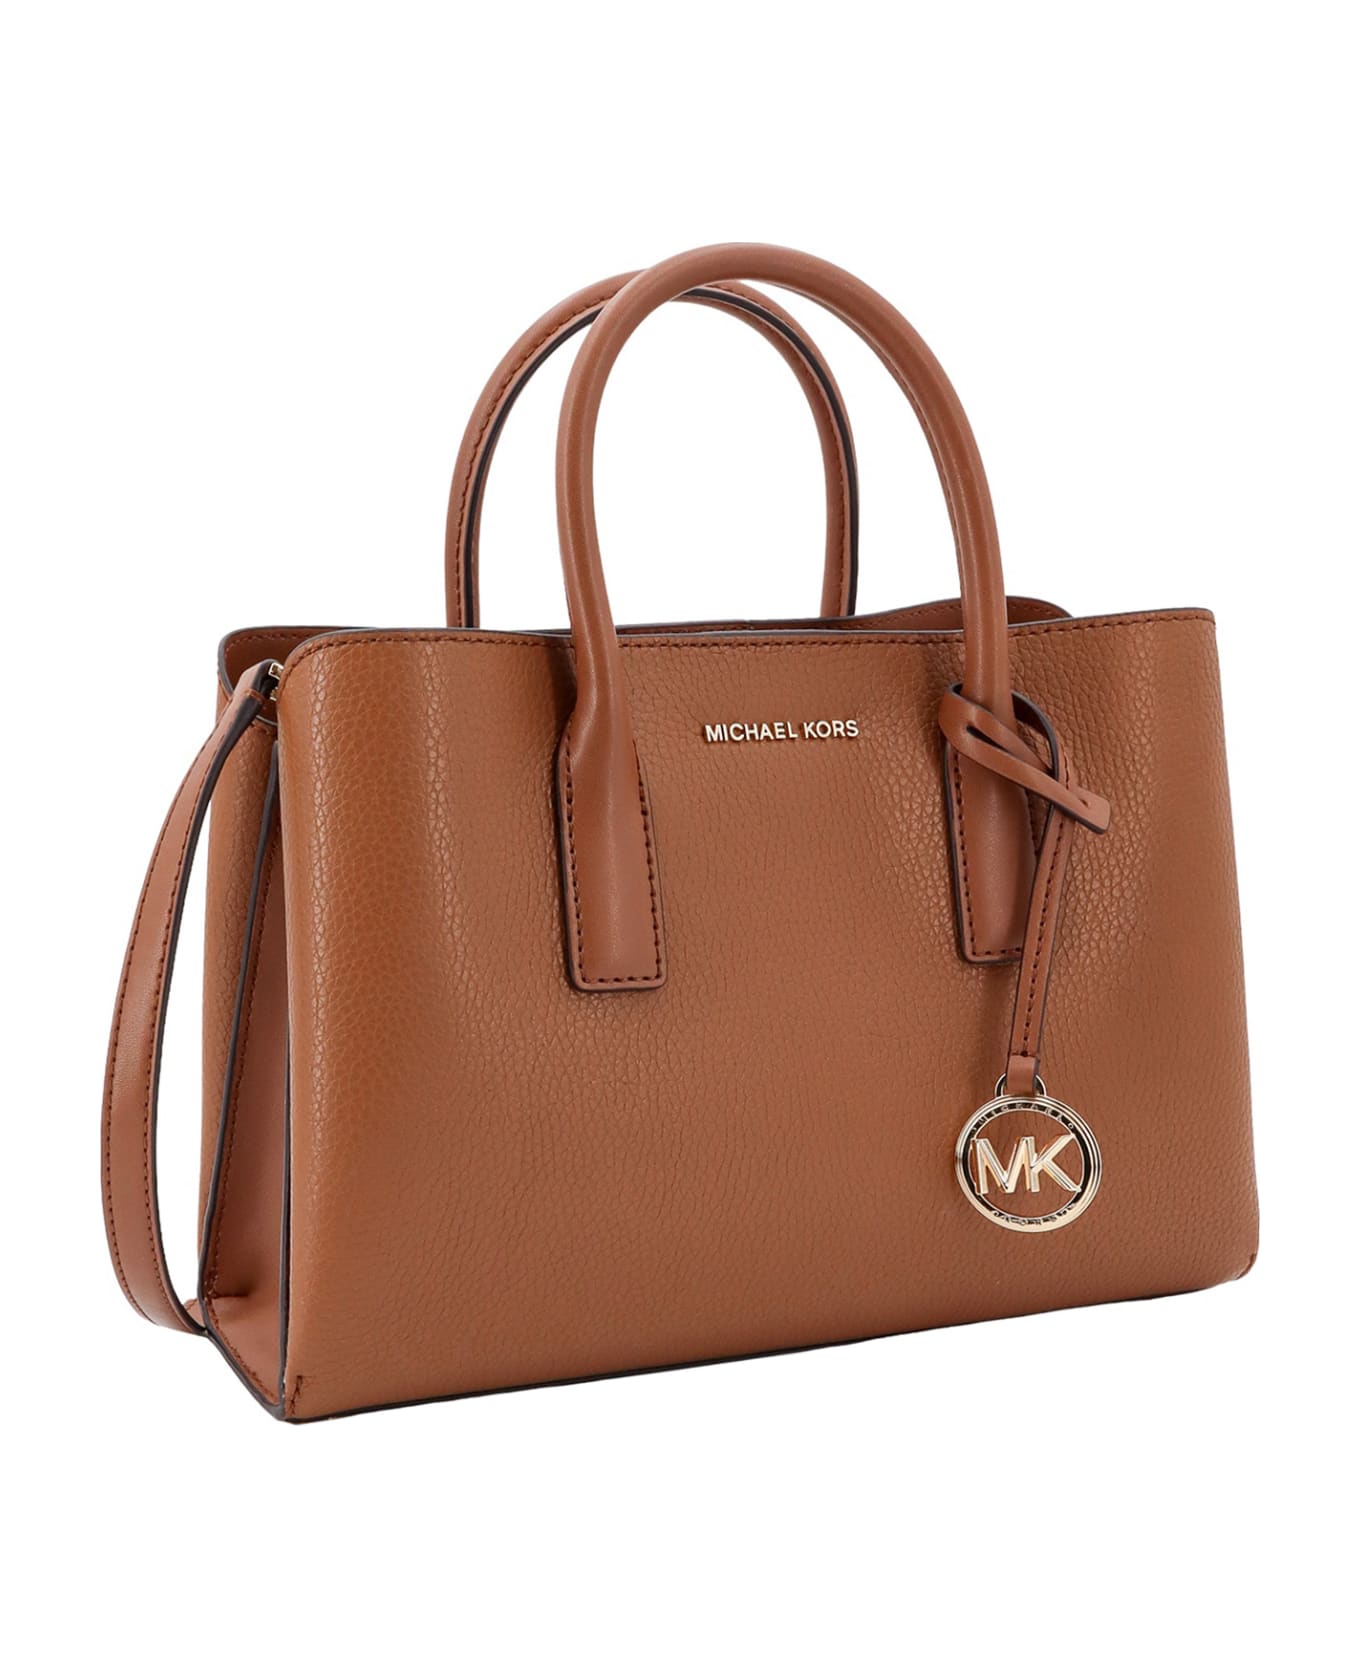 Michael Kors Collection Ruthie Handbag - Luggage トートバッグ